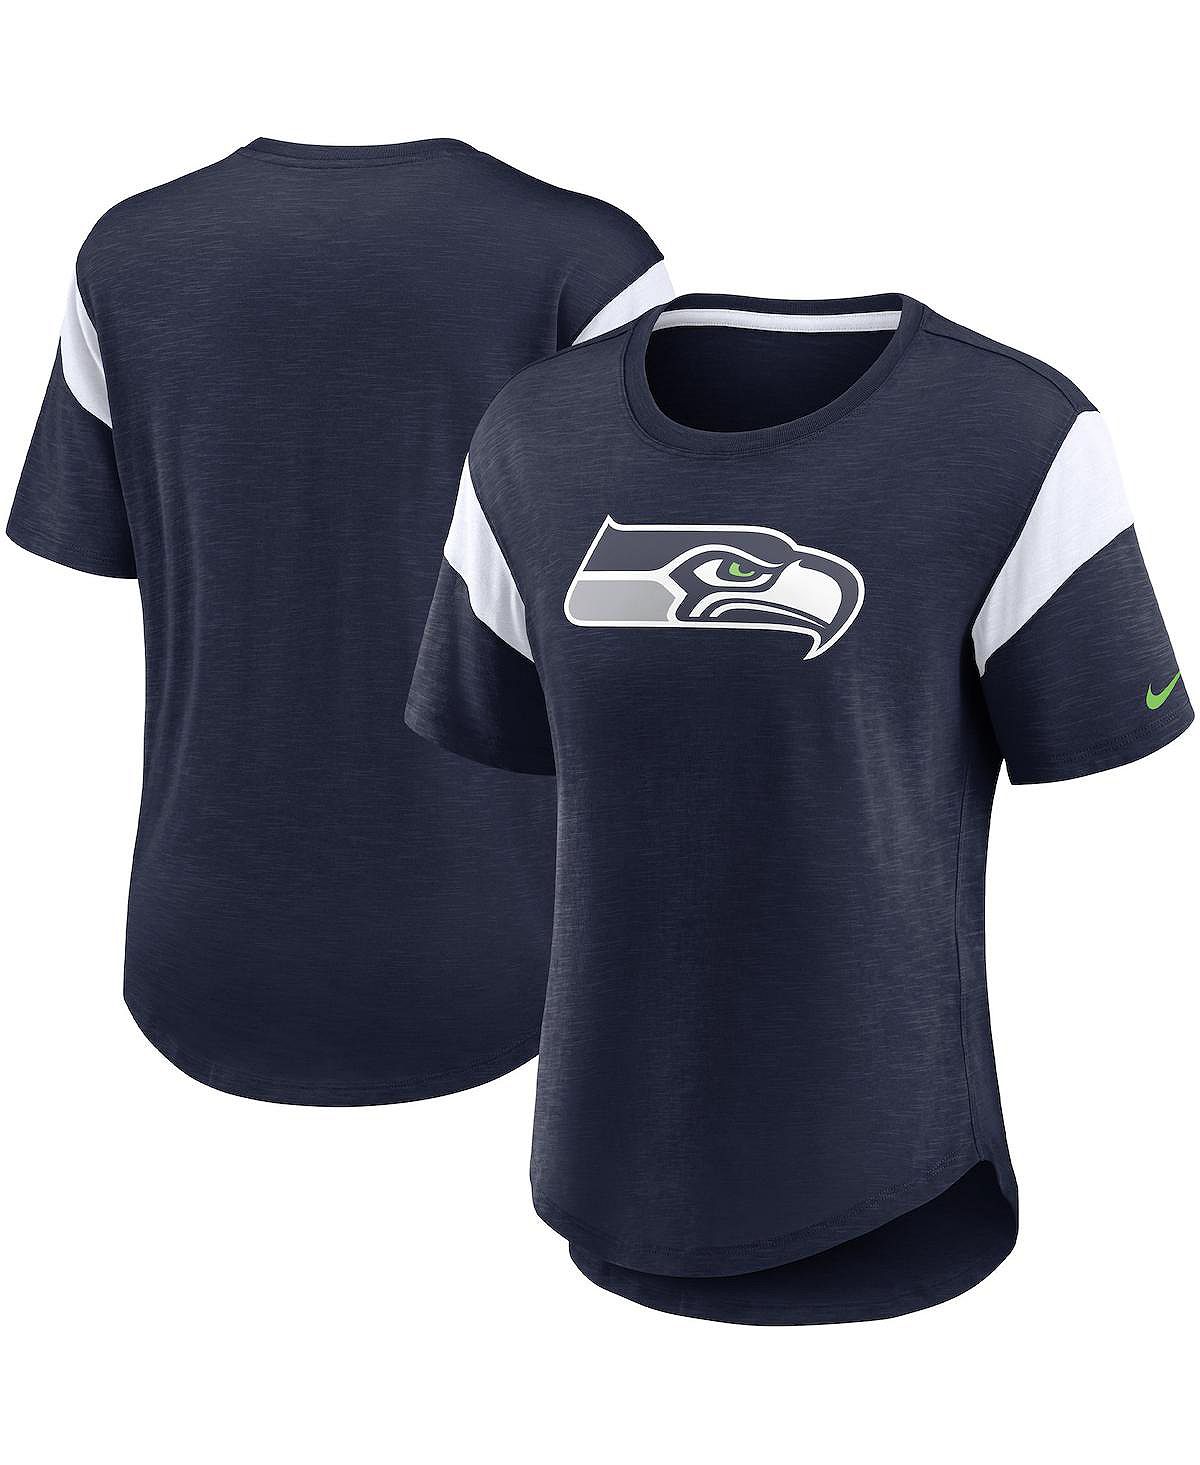 Женская модная футболка темно-синего цвета с логотипом Heather College Seattle Seahawks Nike